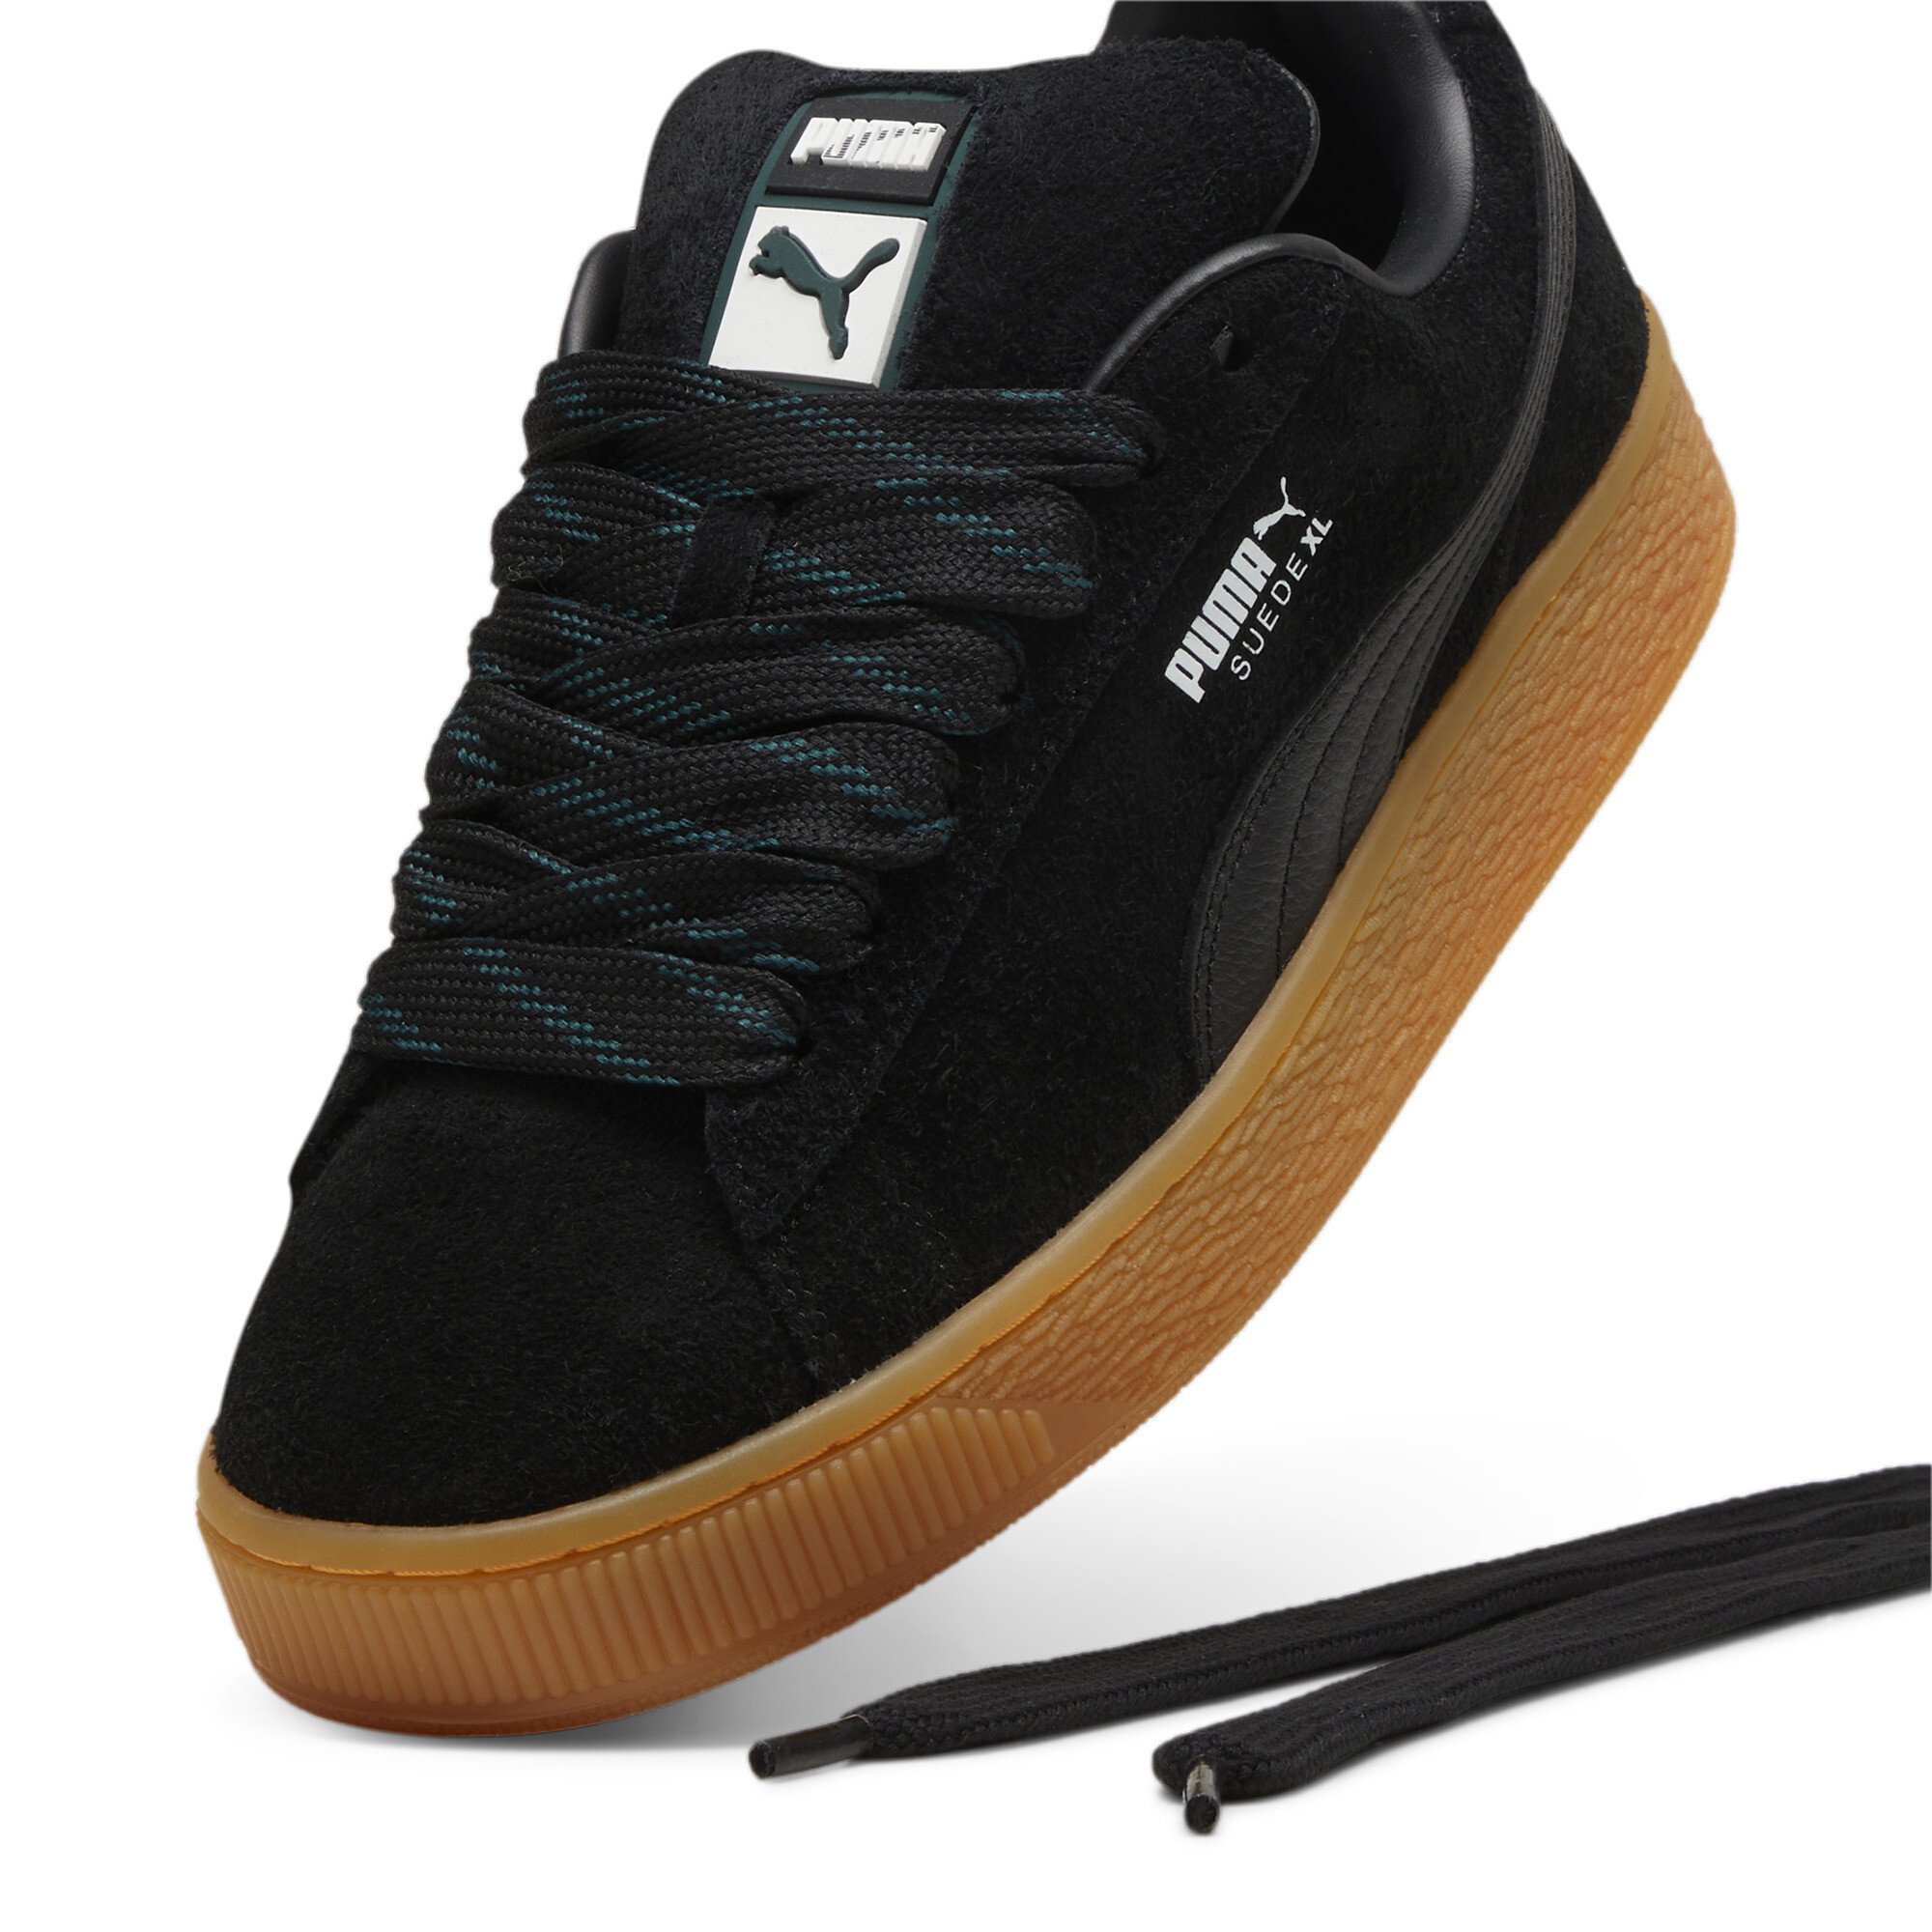 Puma Suede XL Flecked Unisex, Black, Size 44.5, Shoes